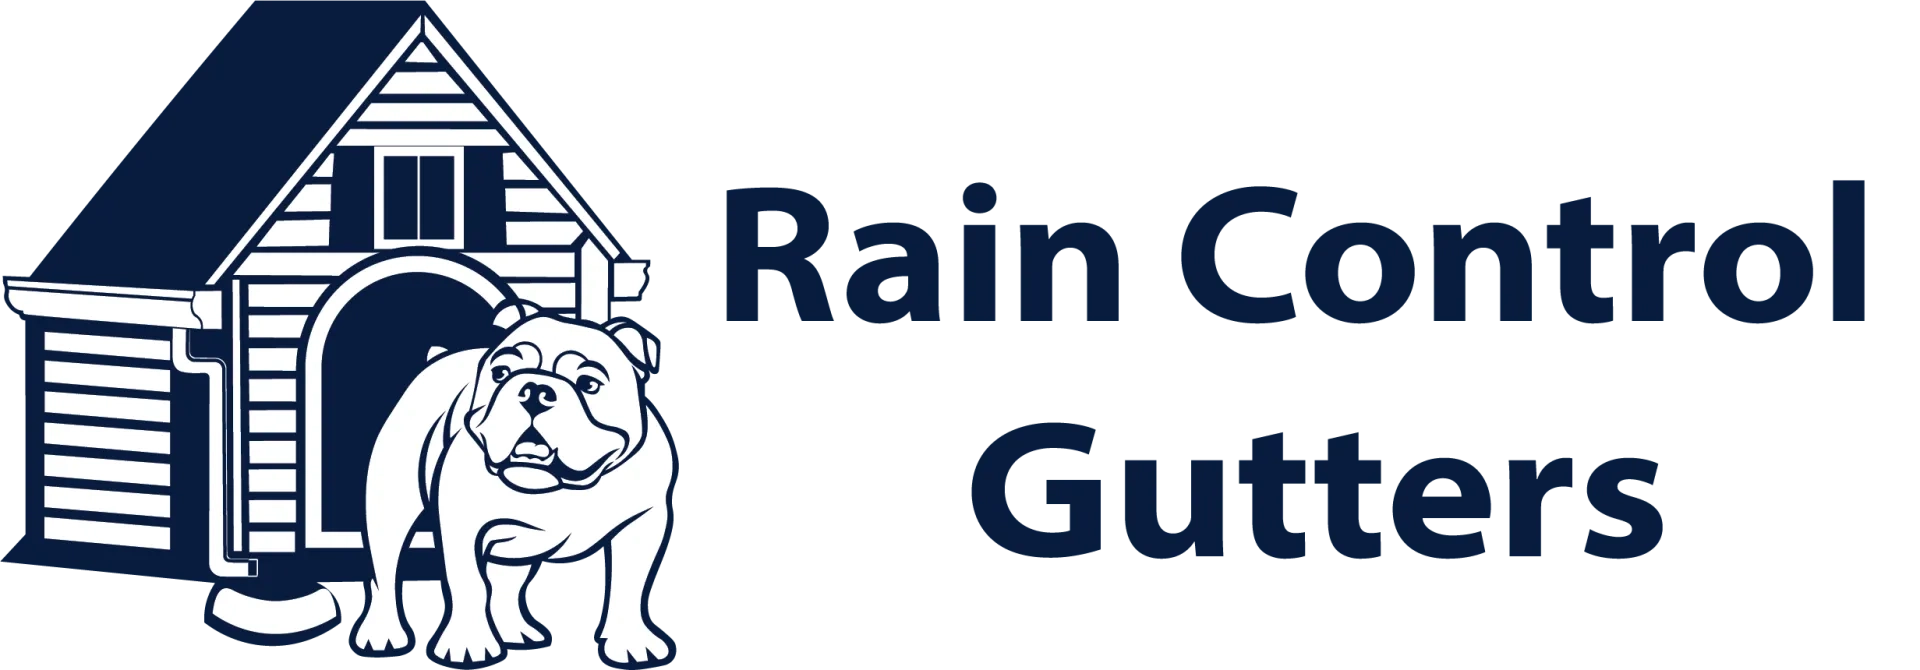 Rain Control Gutters - Corporate Office Logo